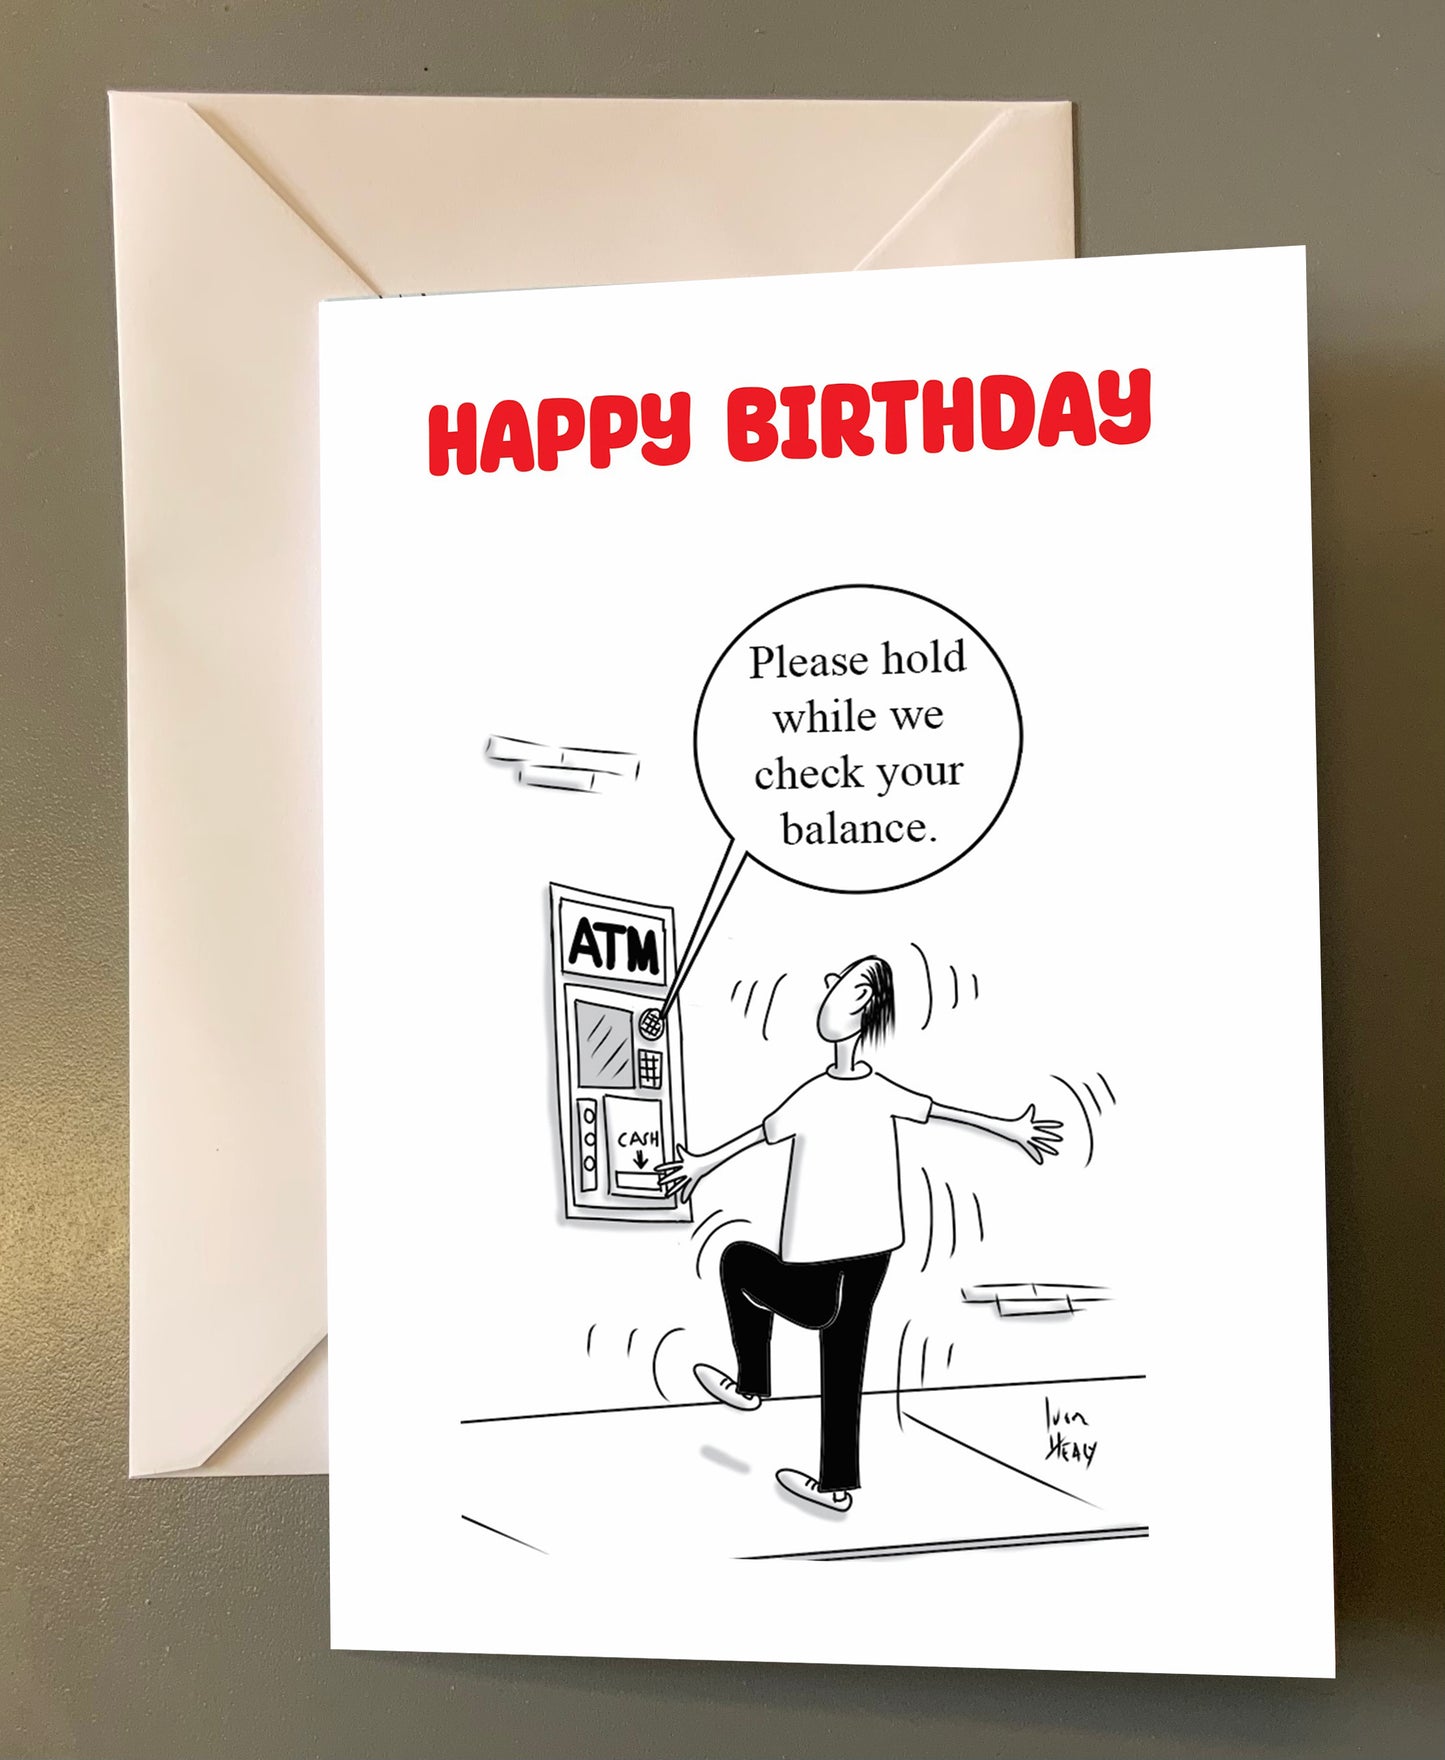 Check your balance Birthday card